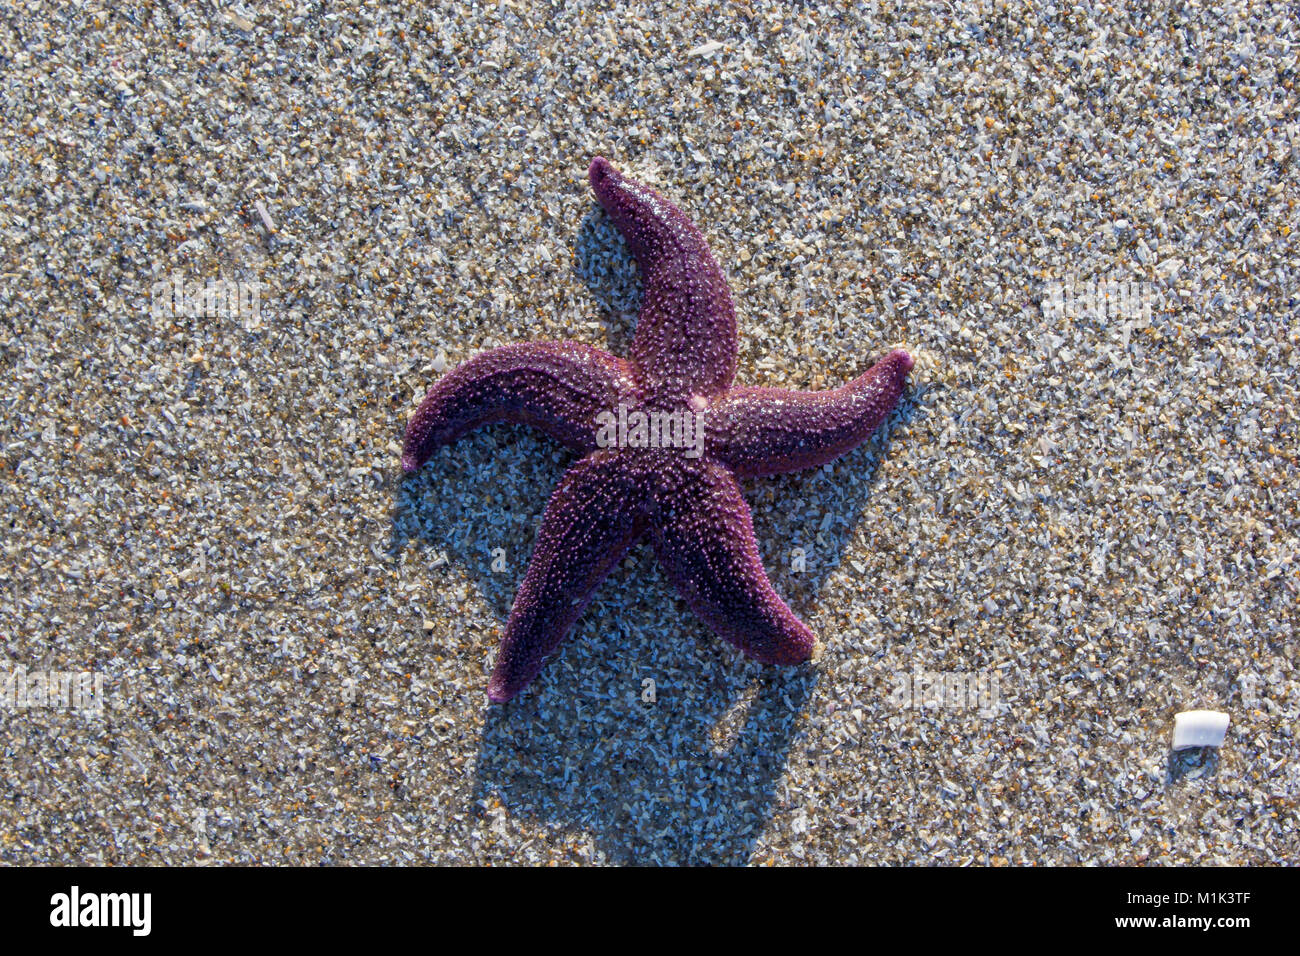 Common starfish on sand beach; Denmark Stock Photo